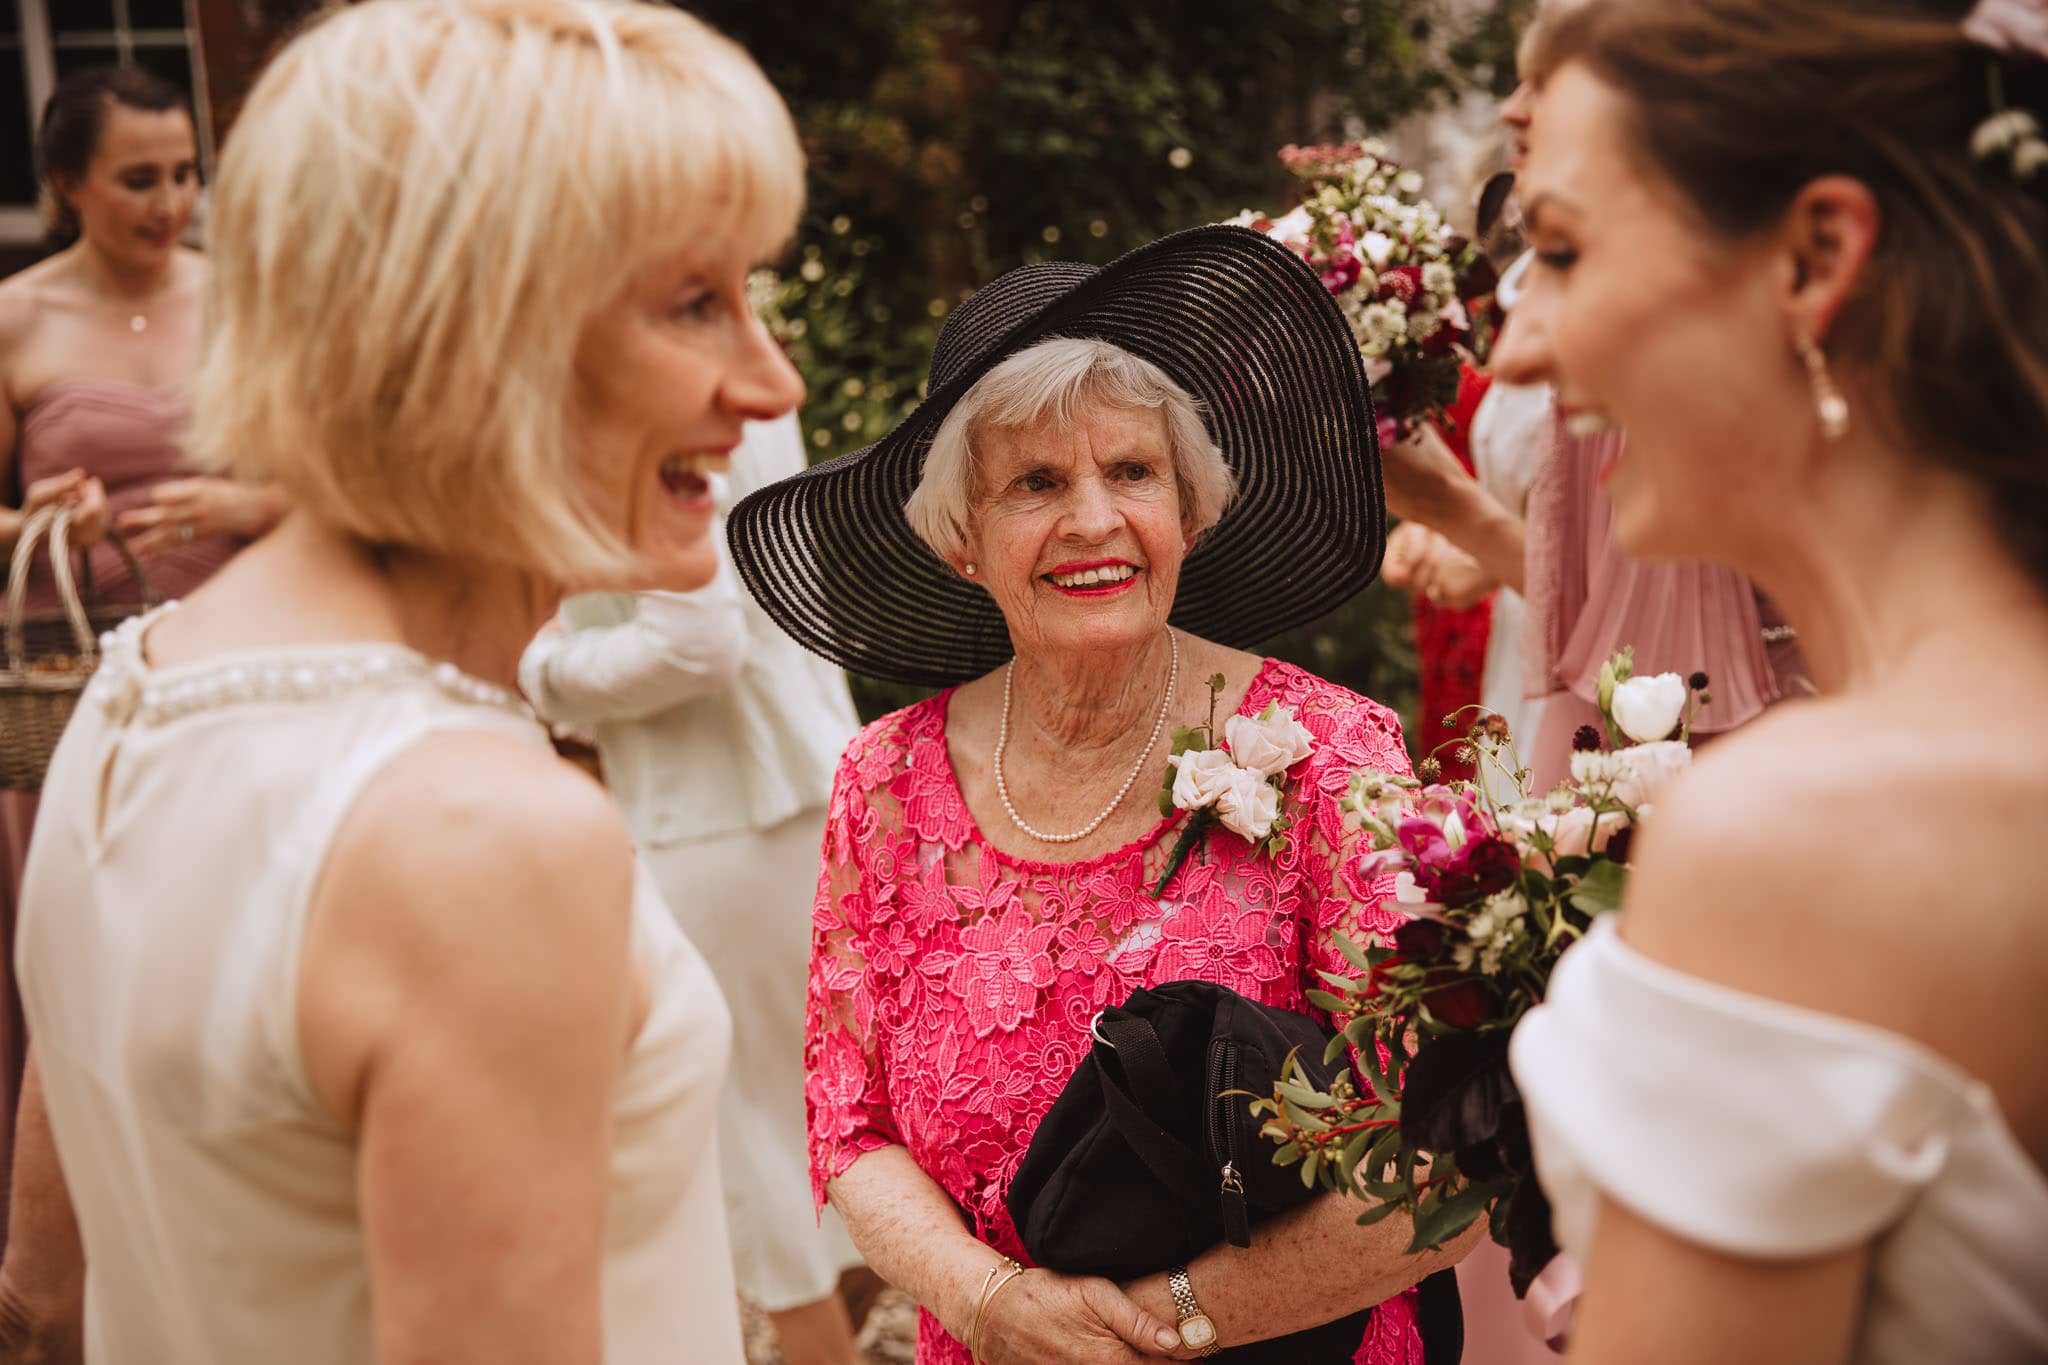 grandma admiring the bride's dress